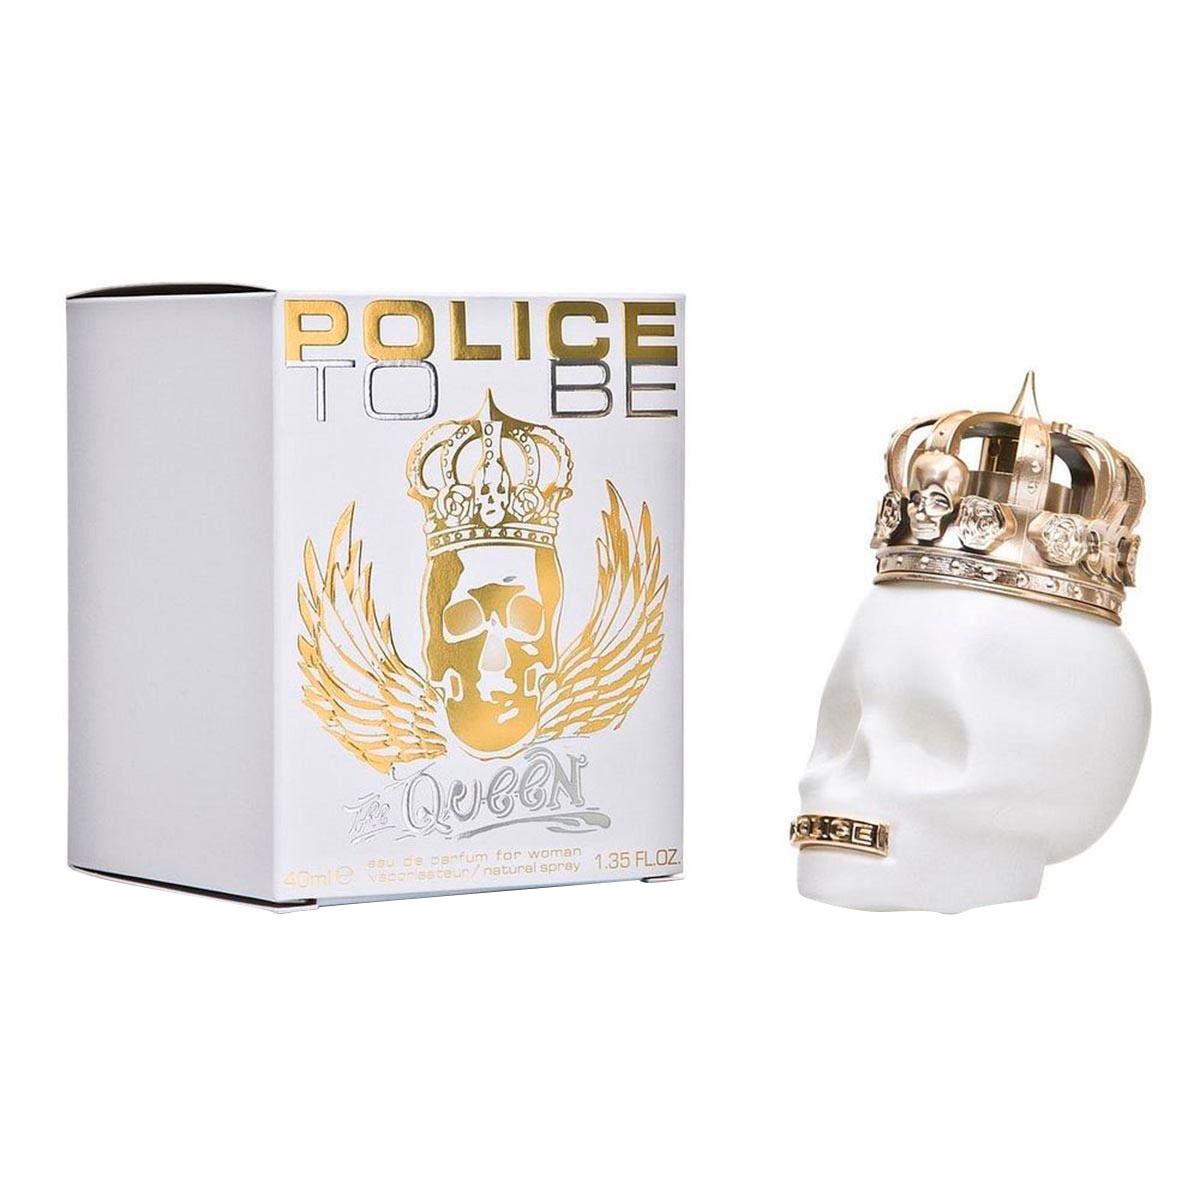 police-to-be-the-queen-75ml-eau-de-parfum